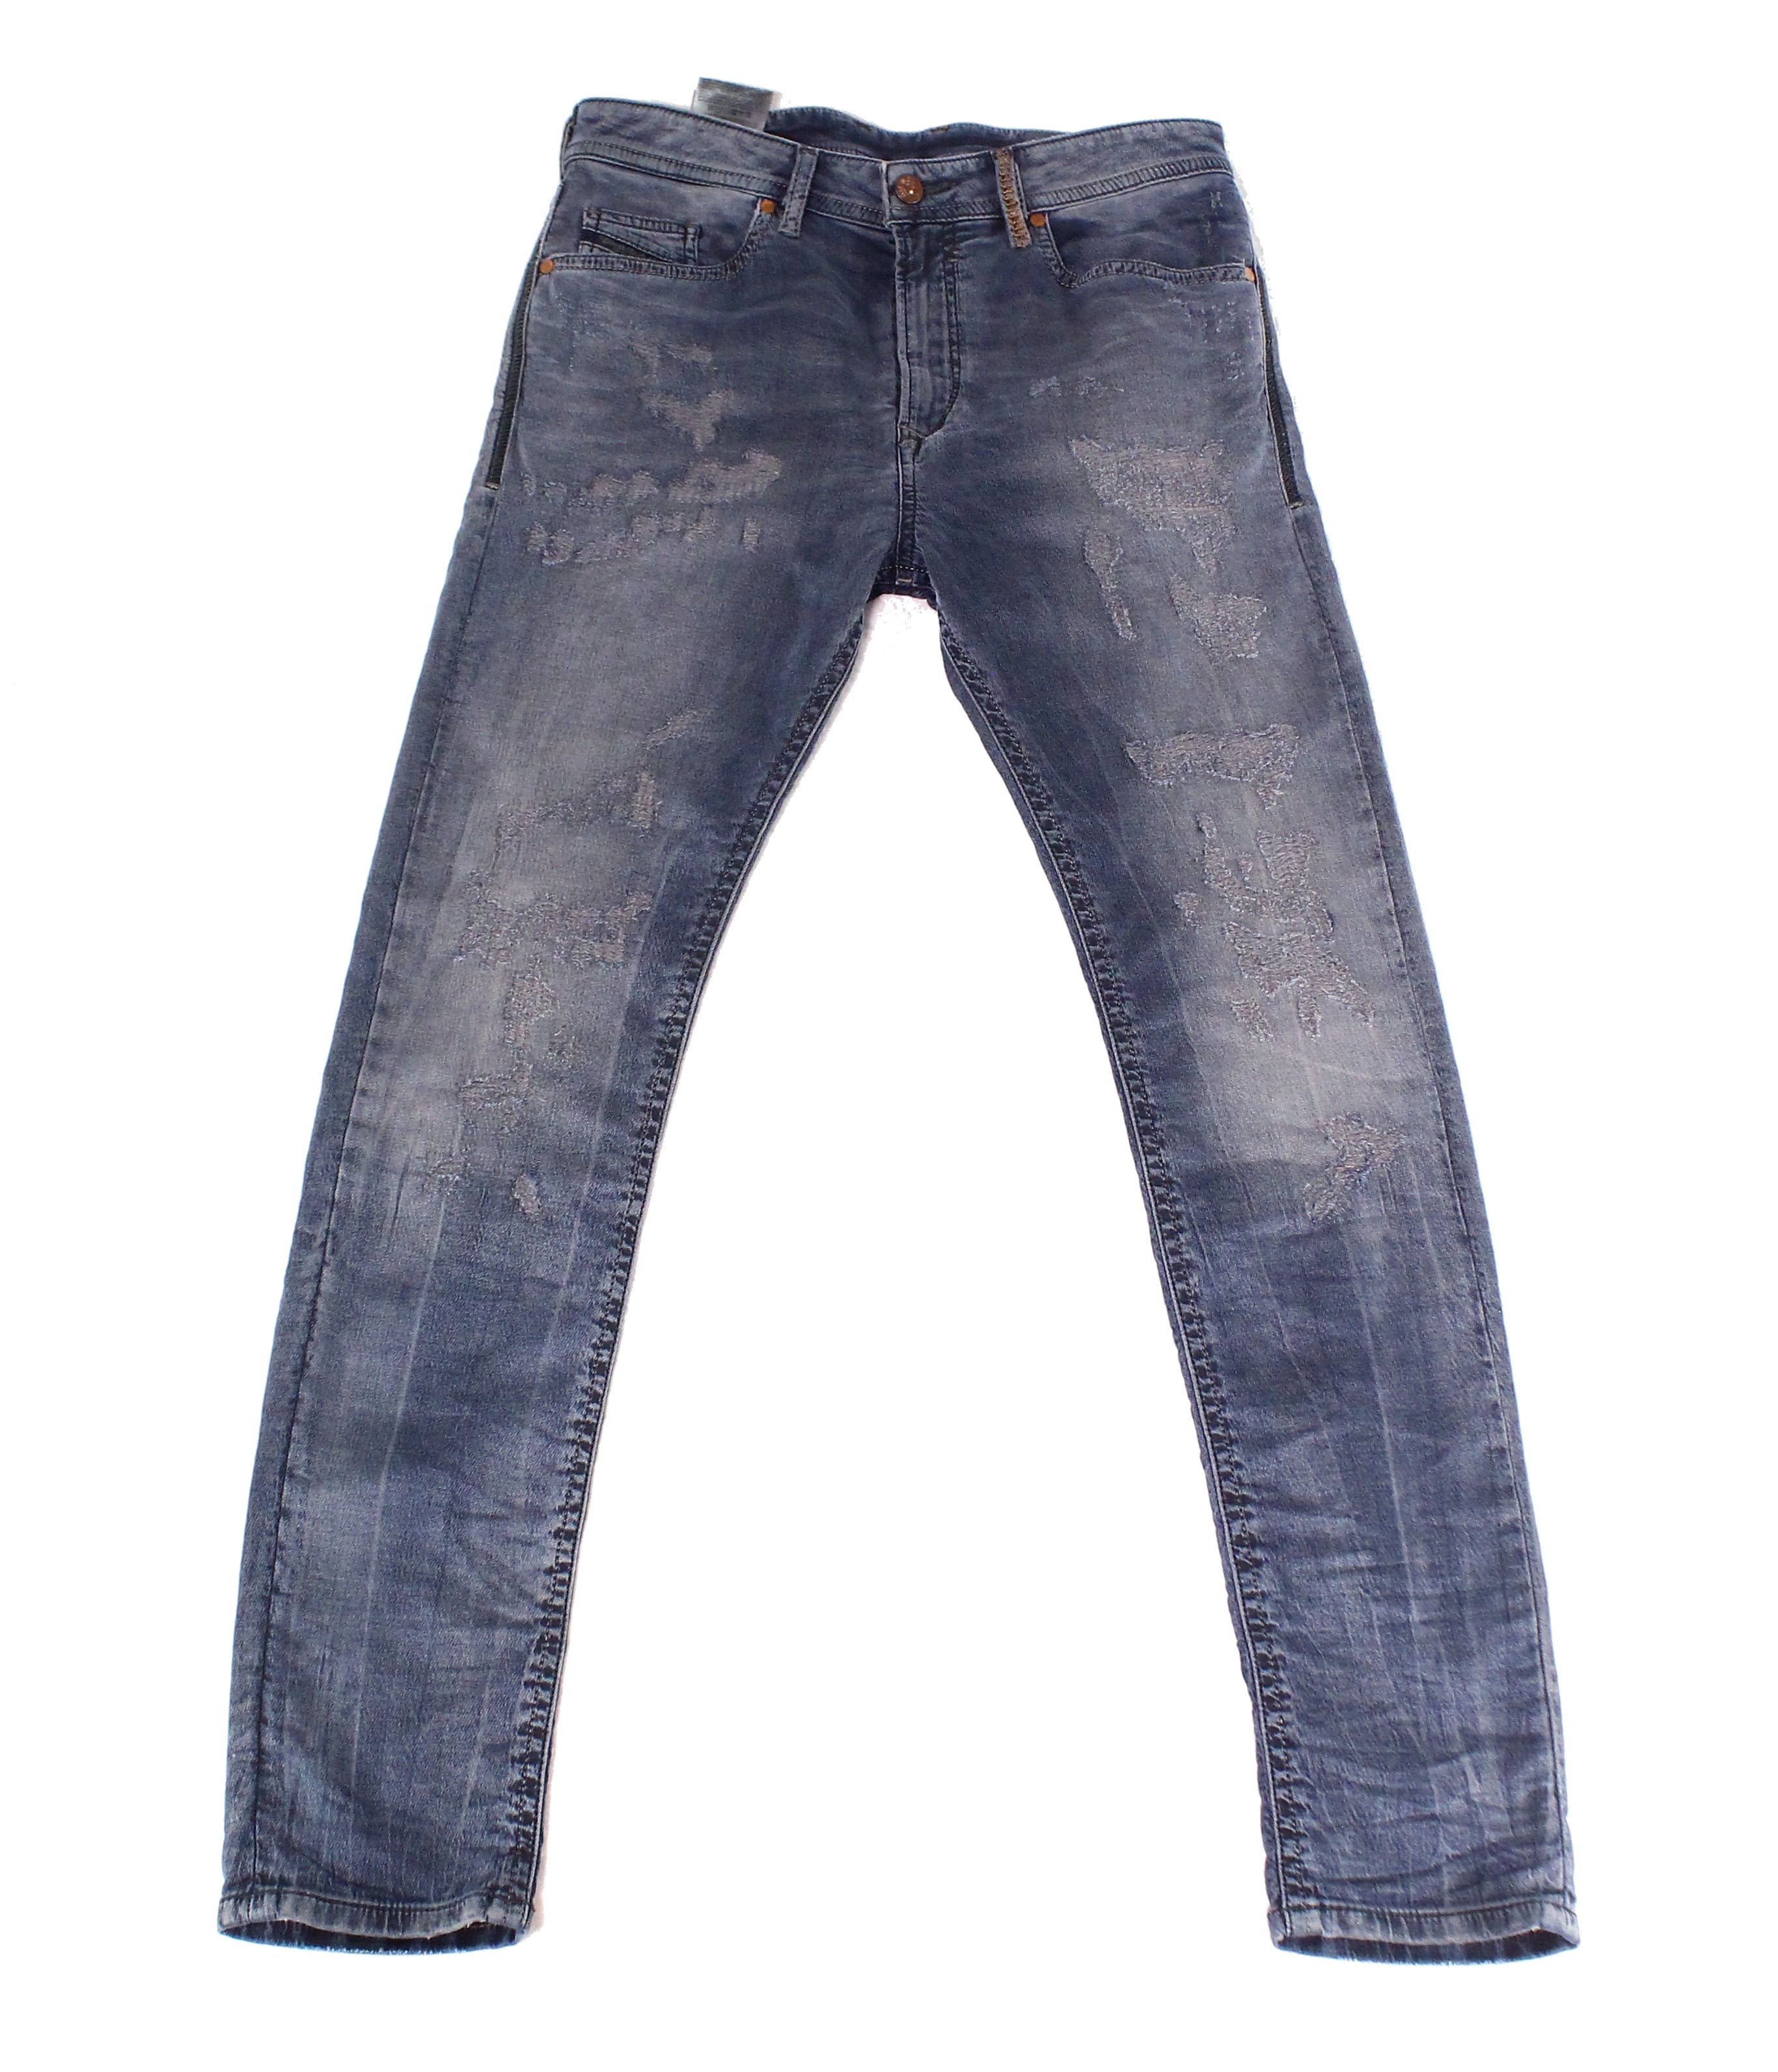 Jogg Jeans - Jogg Jeans NEW Dark Blue Mens Size 28x30 Slim Skinny ...